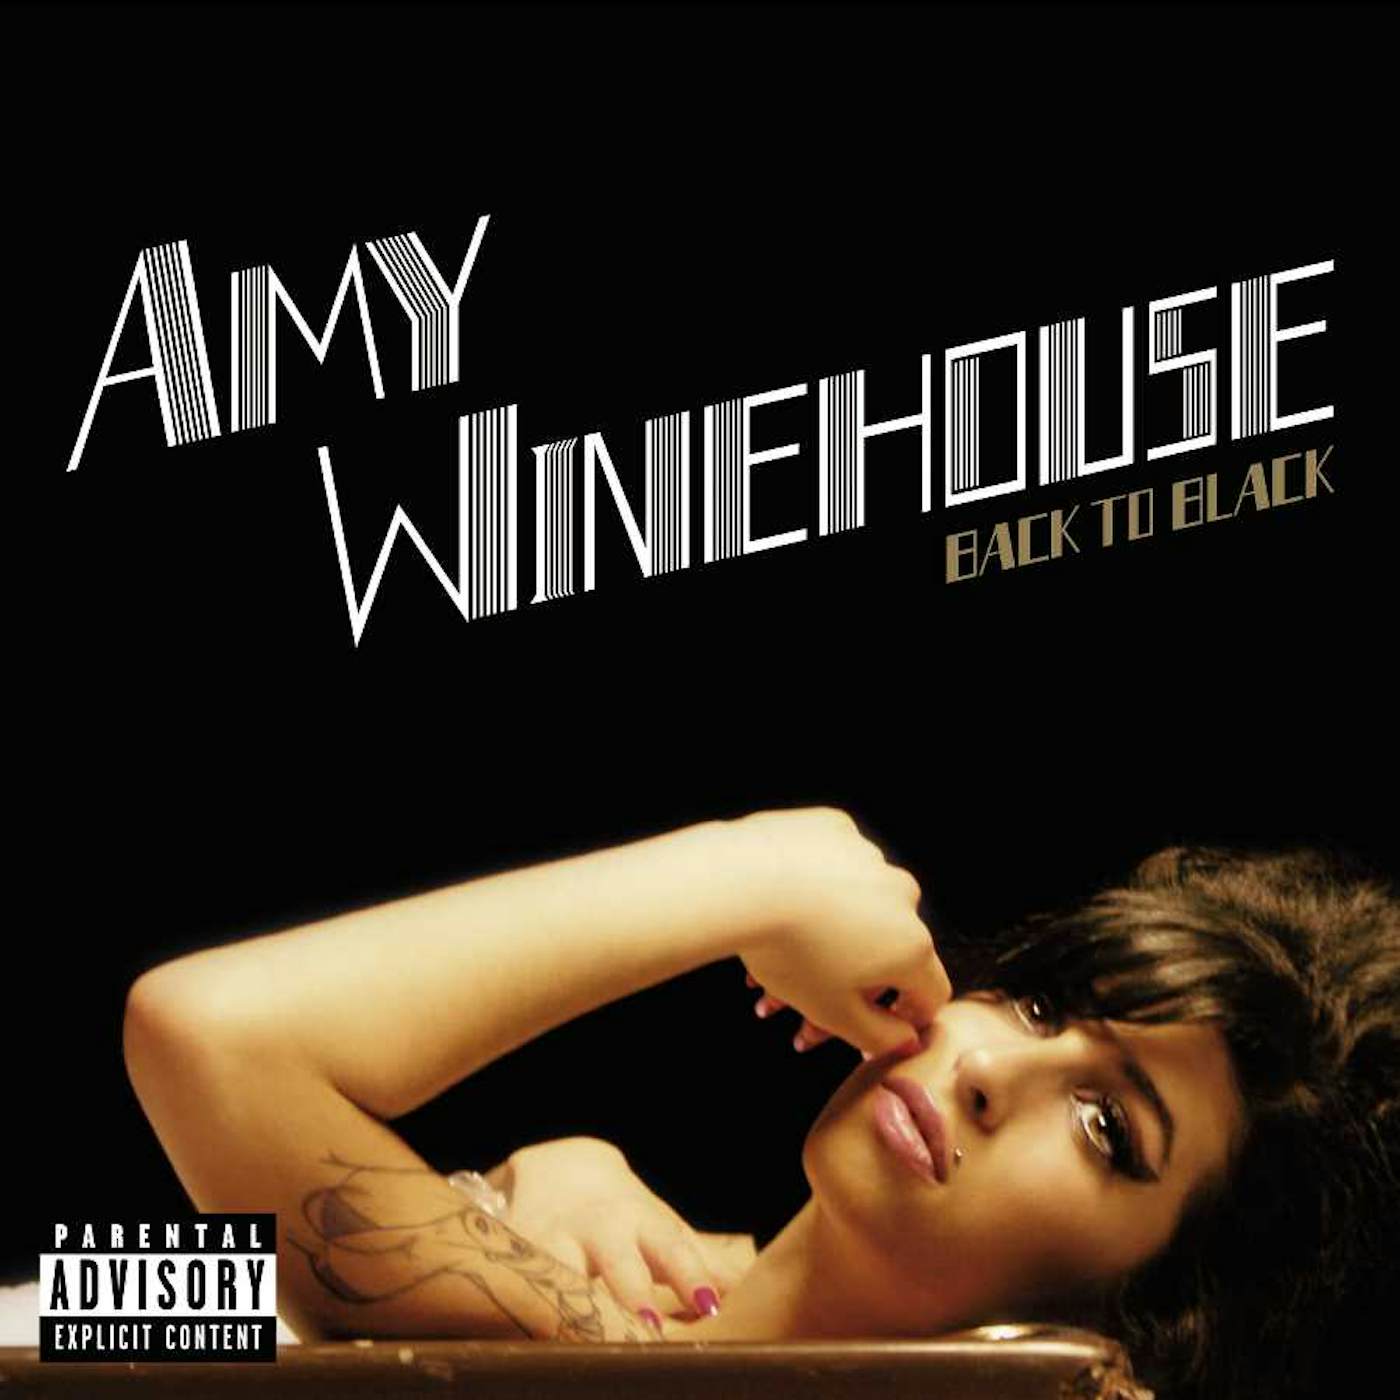 Amy Winehouse Back To Black Vinyl Record